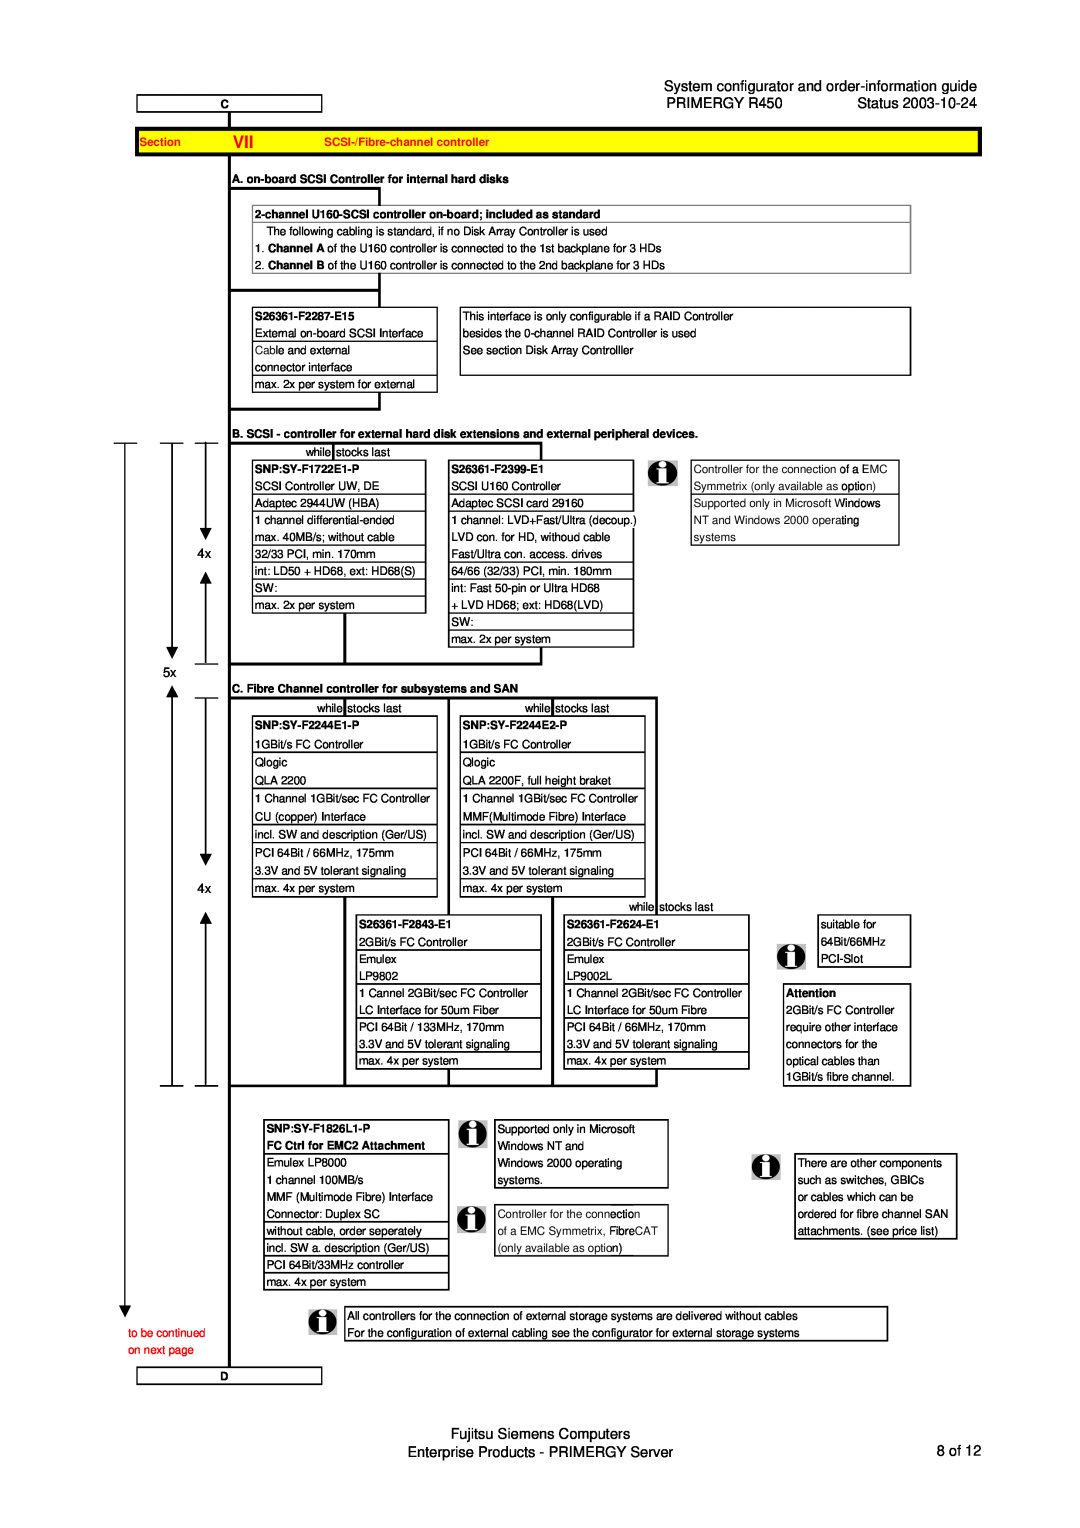 Fujitsu System configurator and order-information guide, PRIMERGY R450, Fujitsu Siemens Computers, Status, 4x, 8 of 